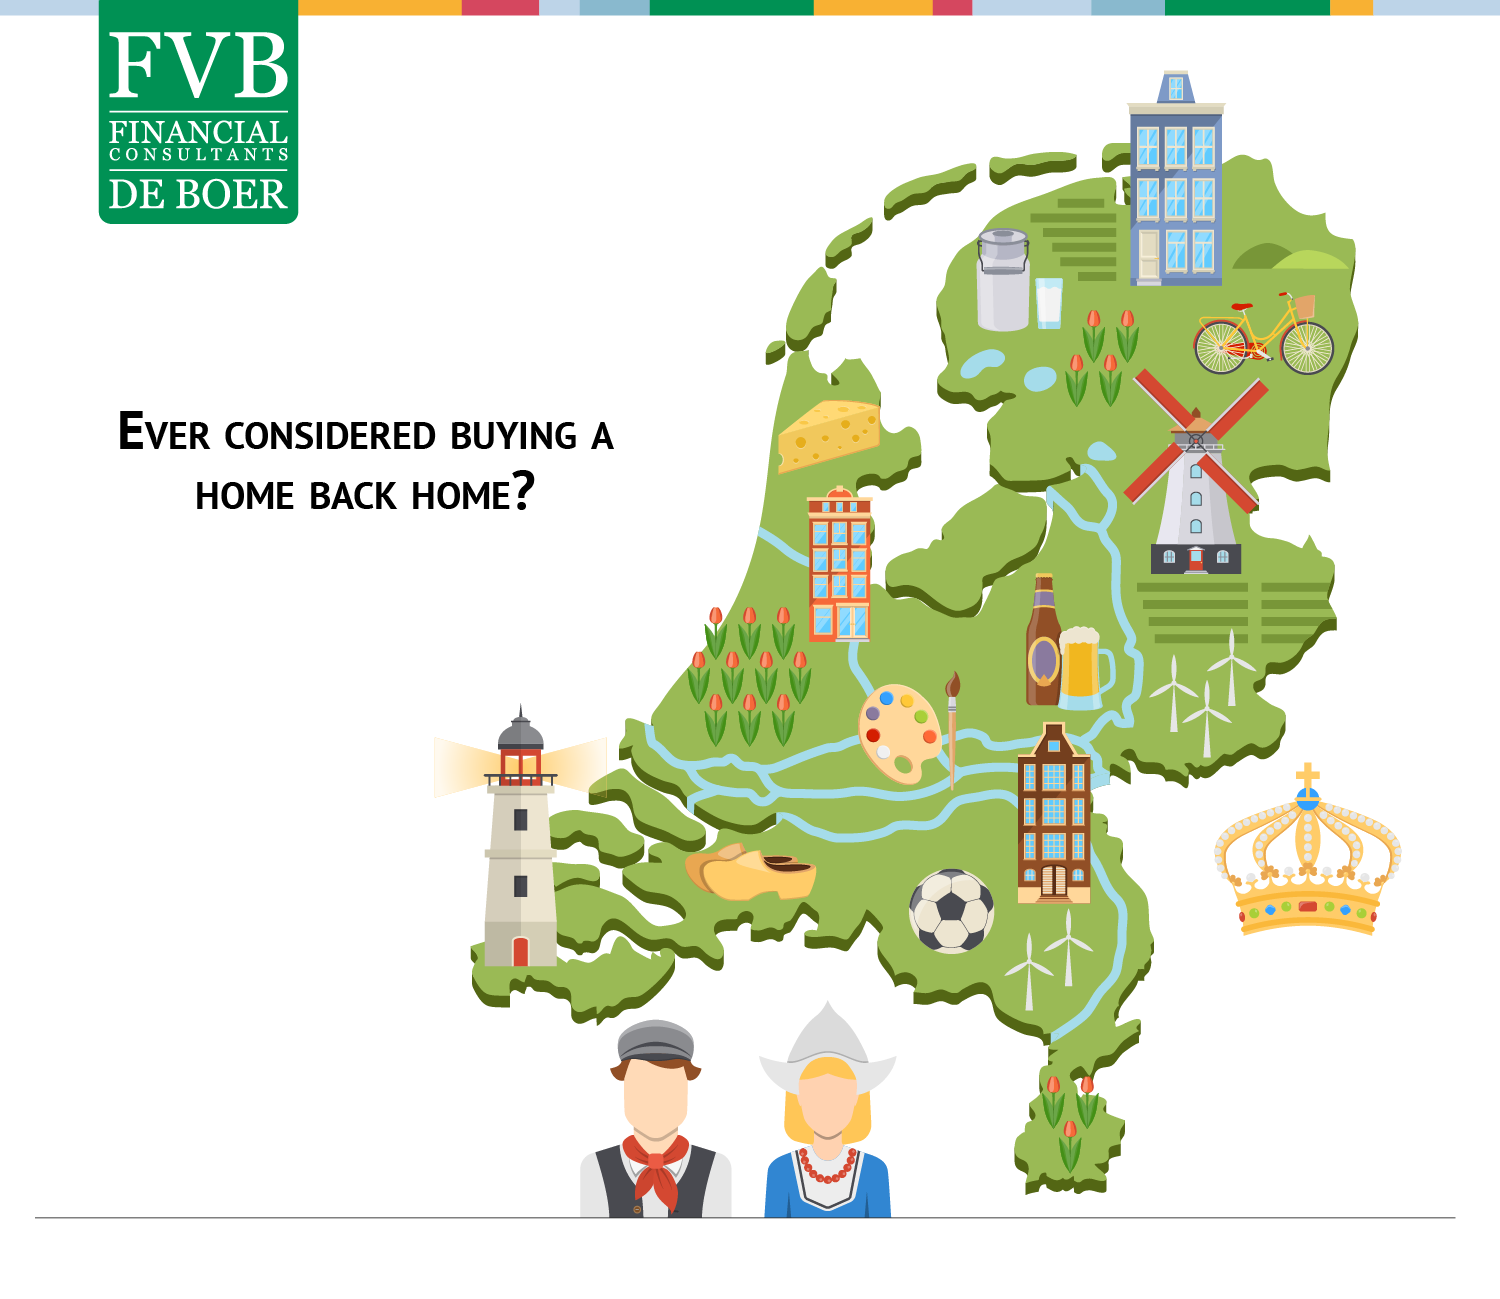 thumbnails Webinar by Financial Consultants FVB De Boer